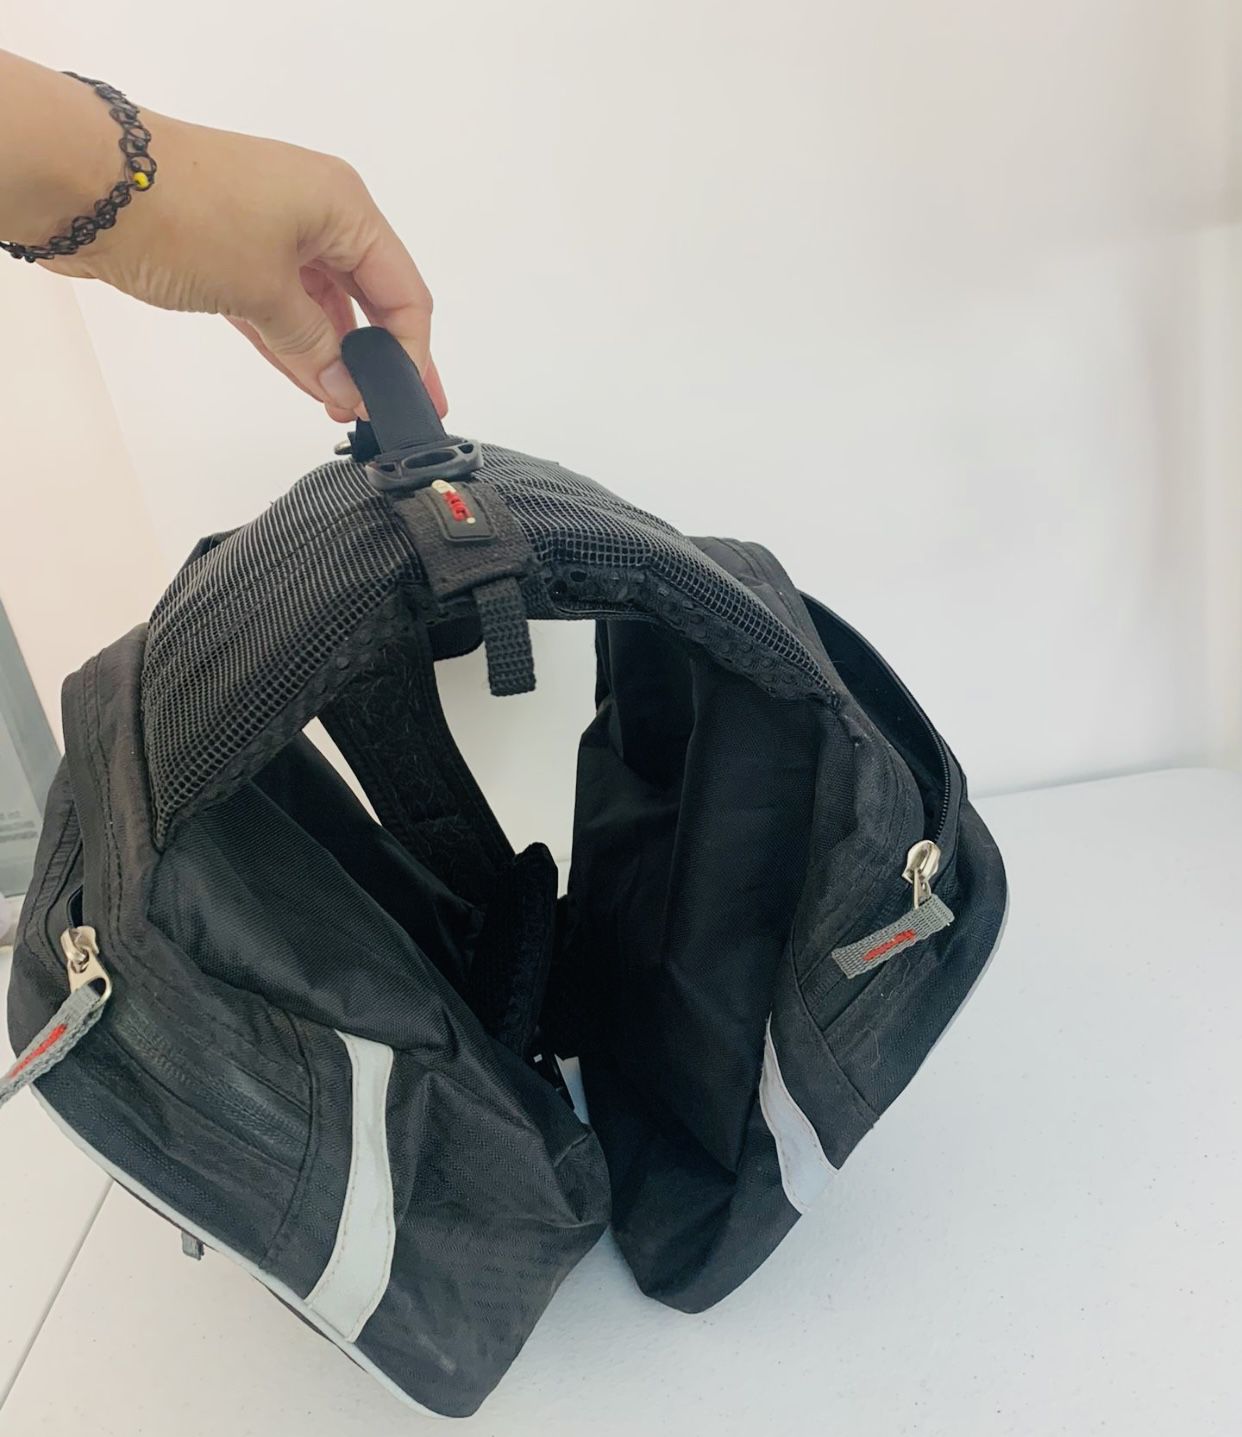 Easy EZY Dog Brand Black Hardness Backpack For Dogs Medium To Large Dog 🐕 For Service Dog Or For Hiking Dog Bag 